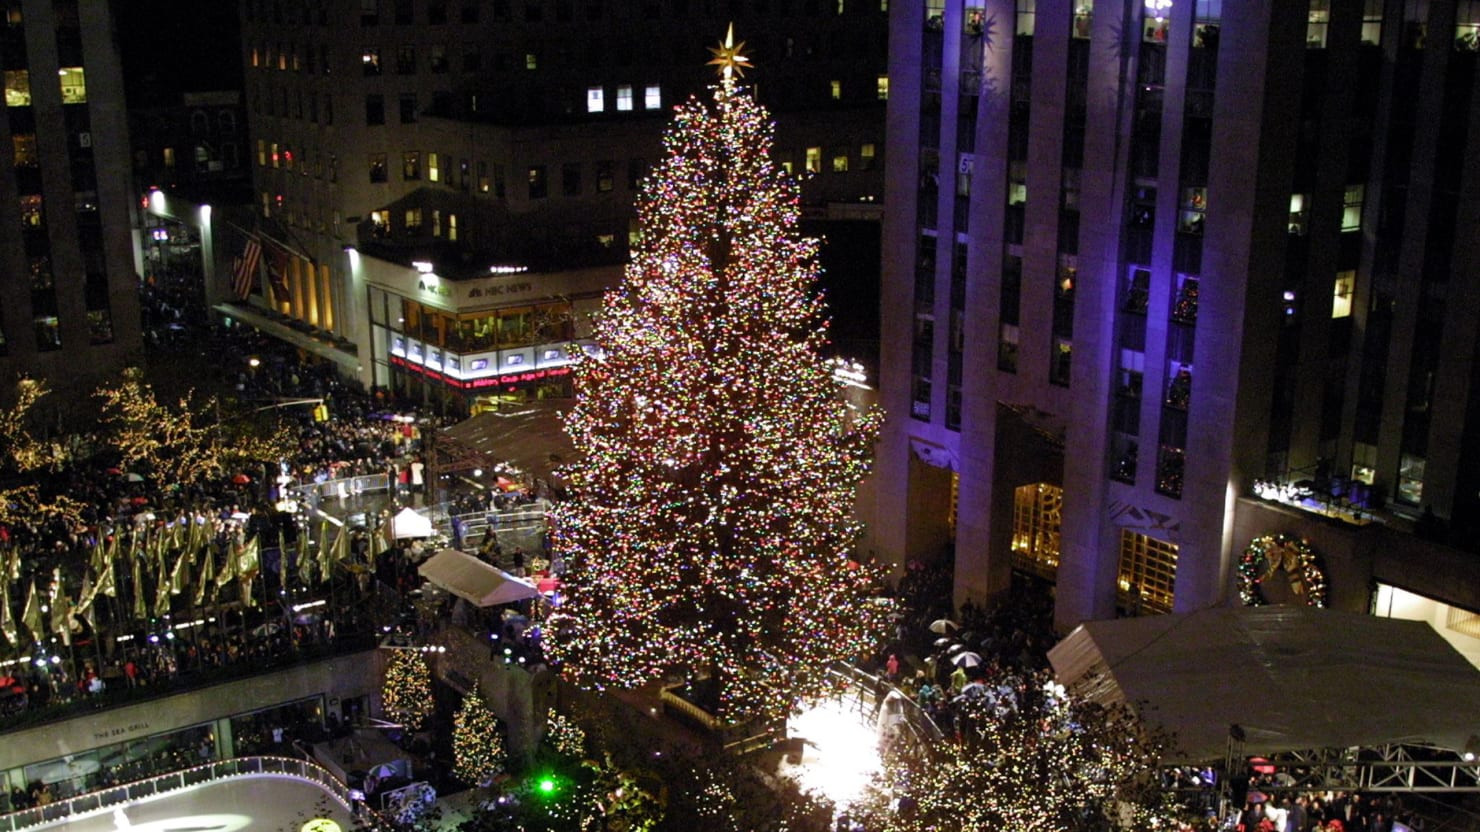 Rockefeller Christmas Tree Lighting
 Watch the 2016 Rockefeller Christmas Tree Lighting Live